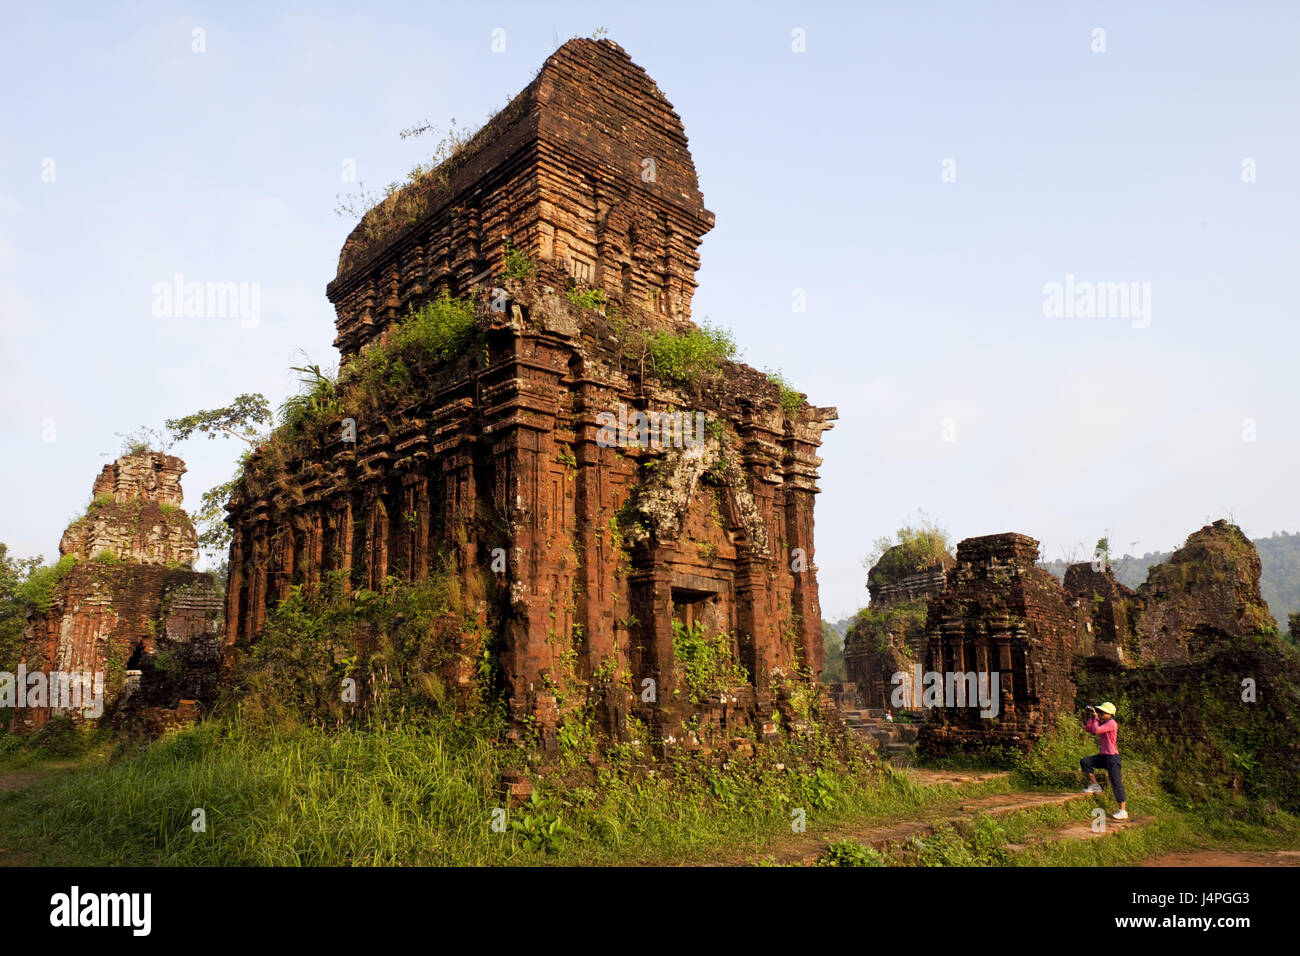 Vietnam, micron Son, Cham ruins, tourist, no model release, Stock Photo